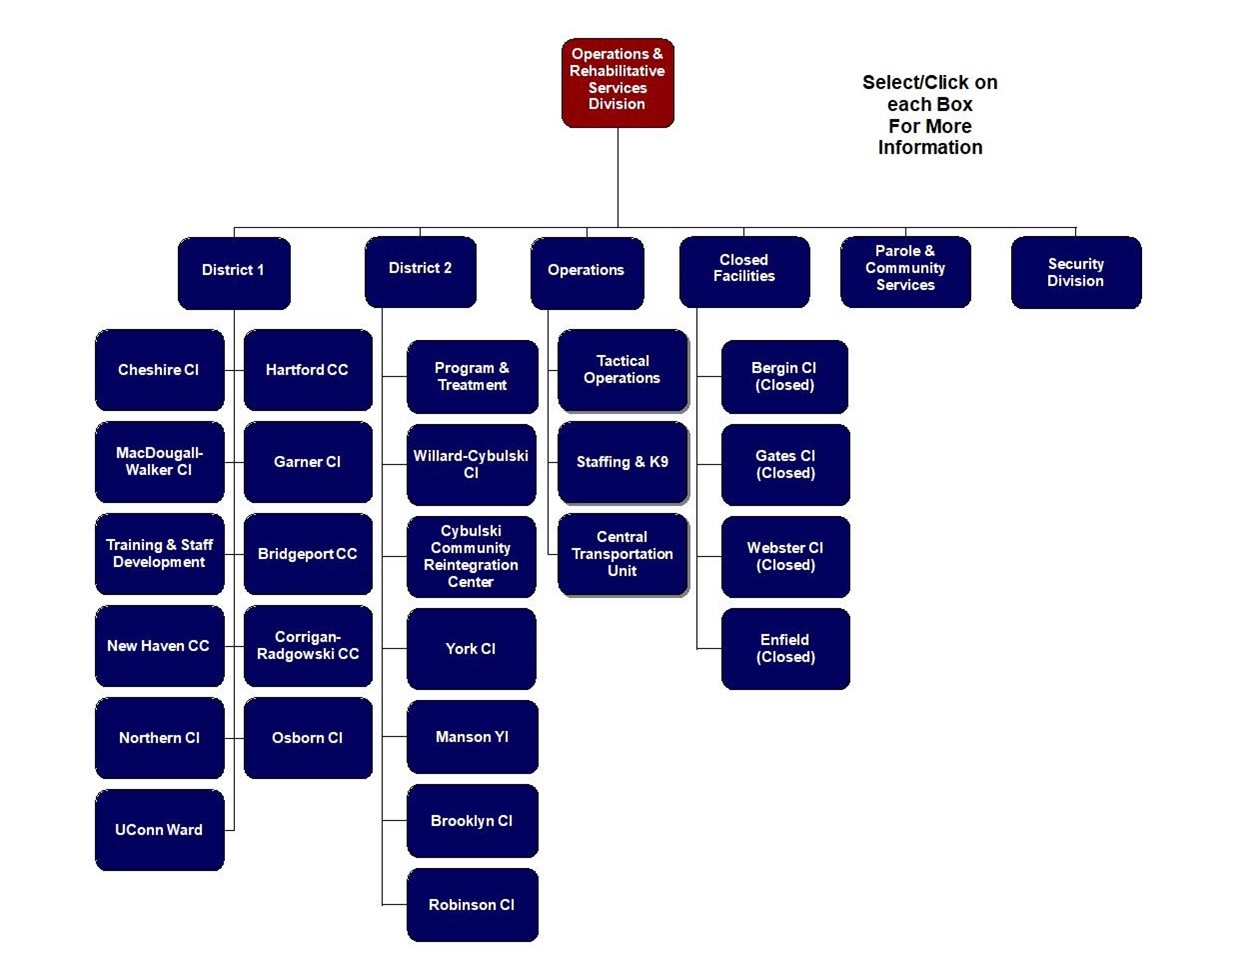 Department of Correction Organization Chart